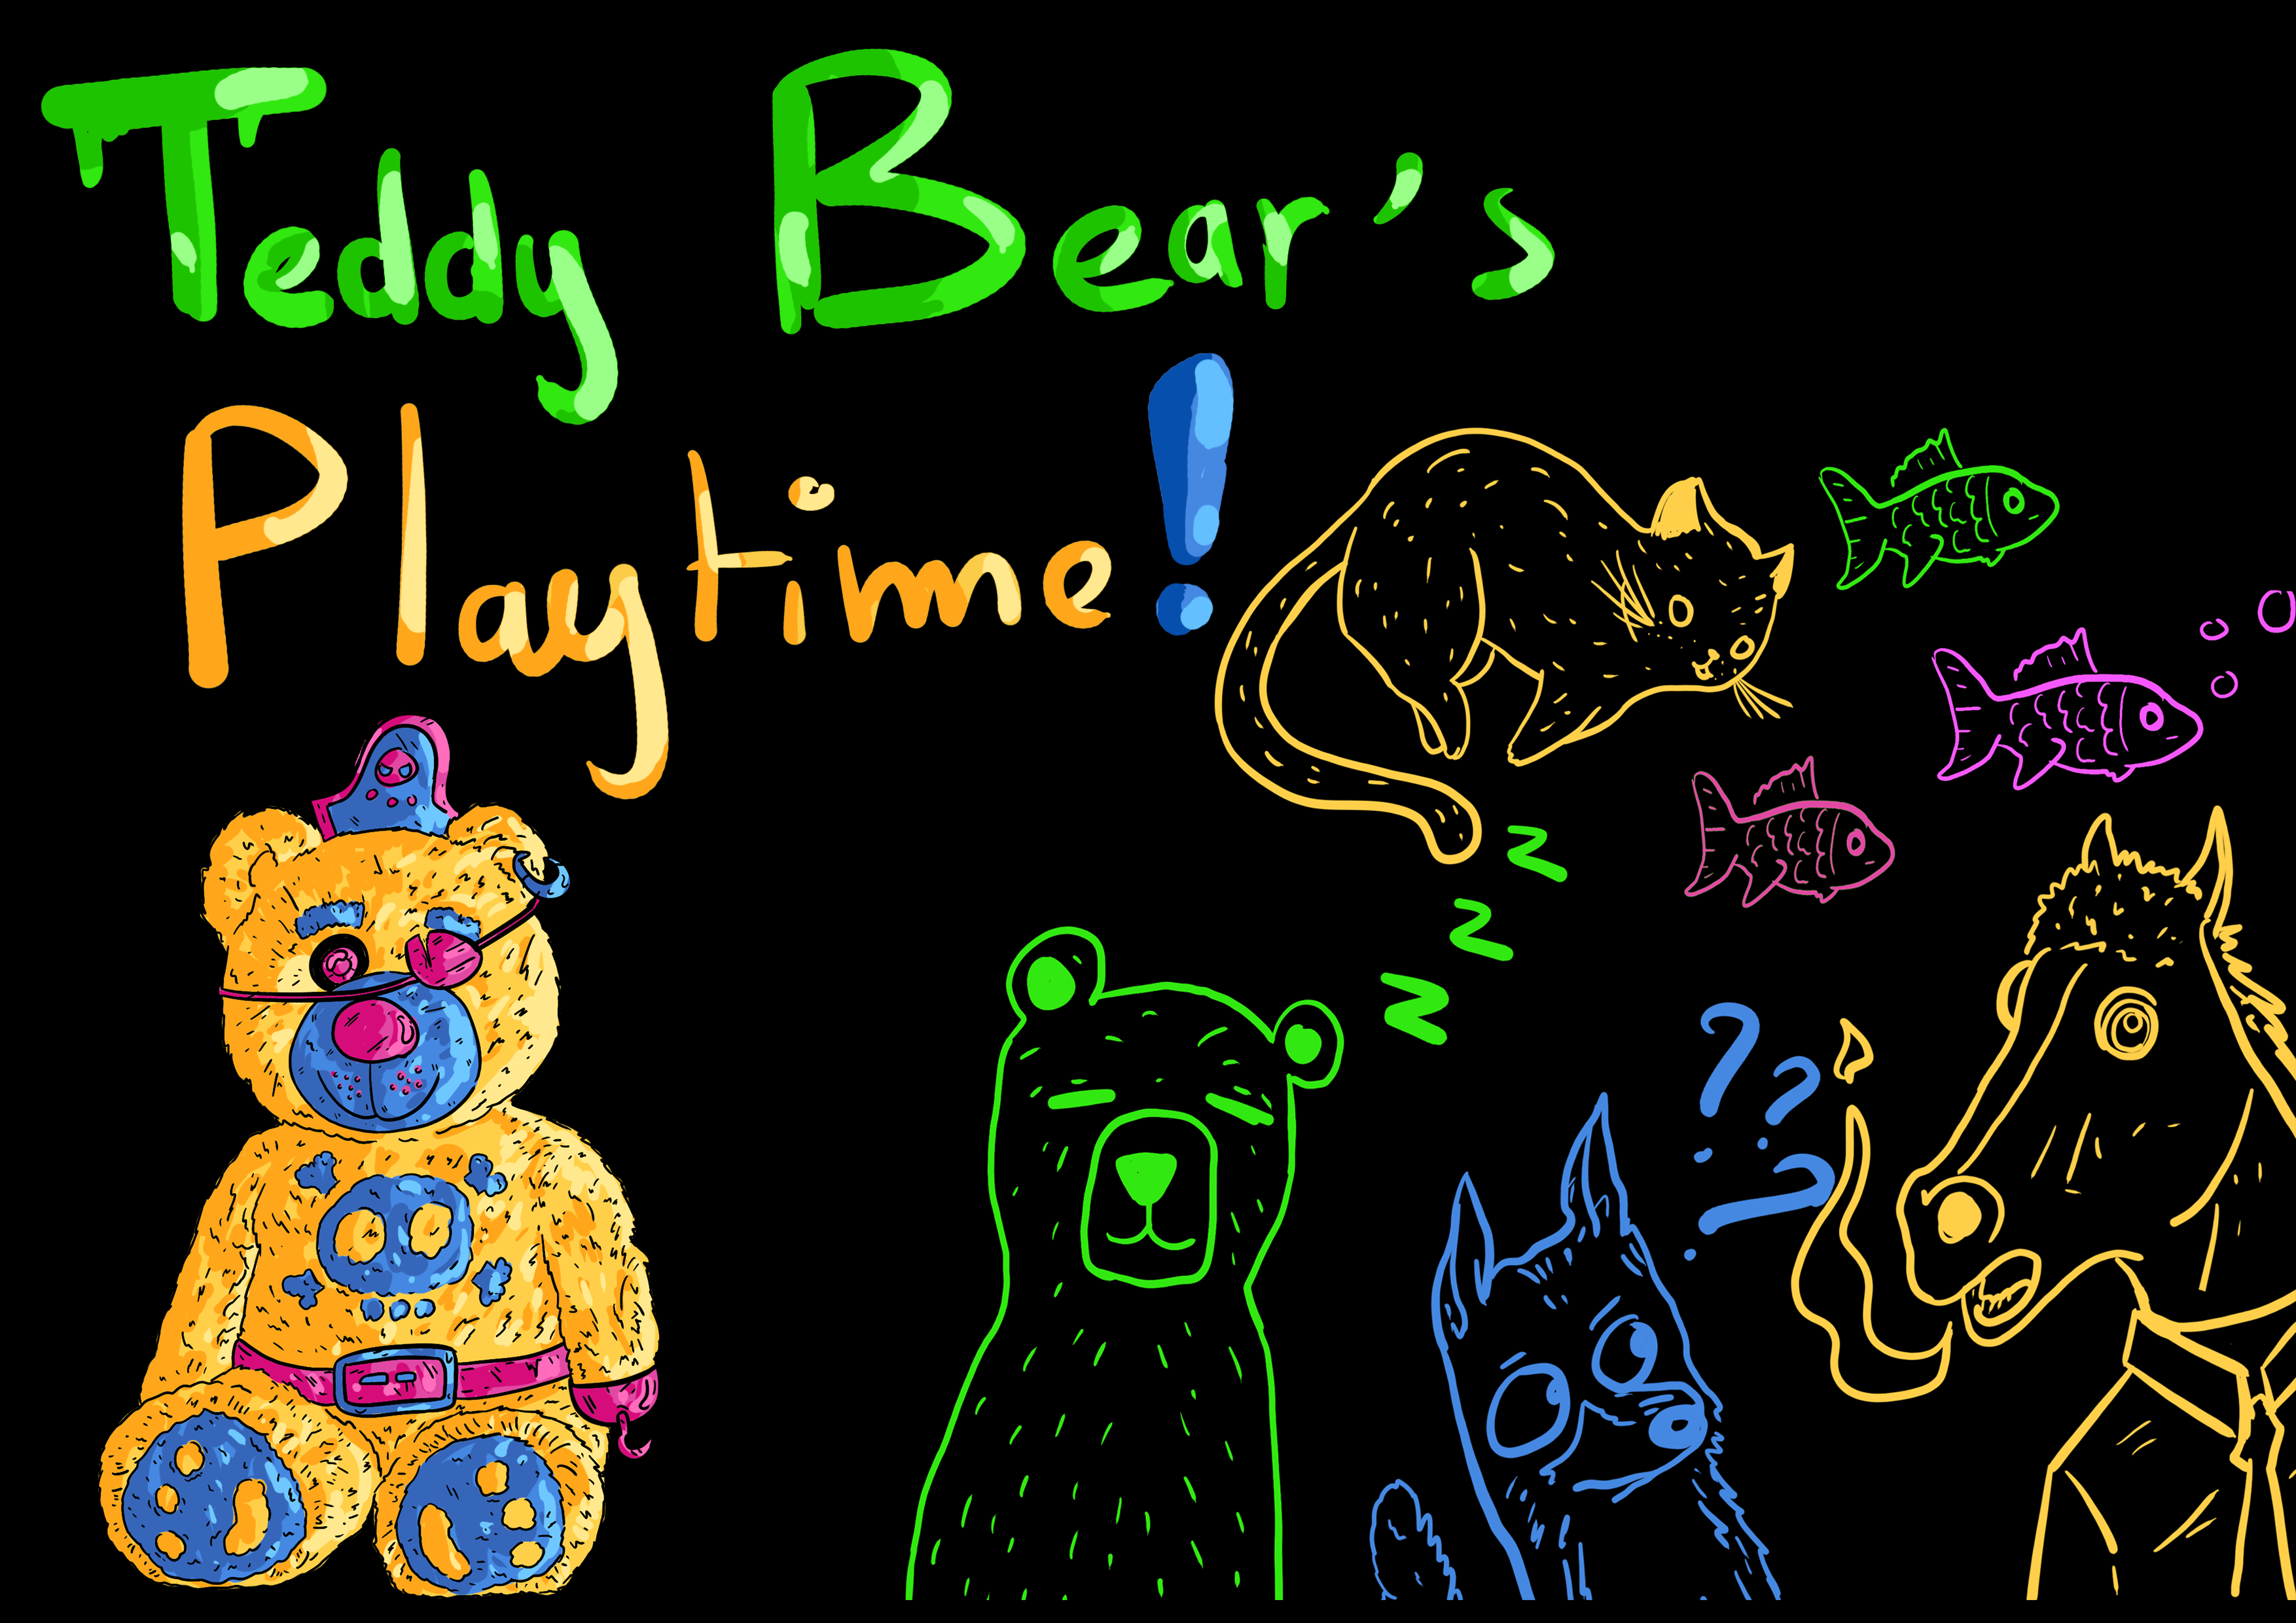 Teddybear's Playtime